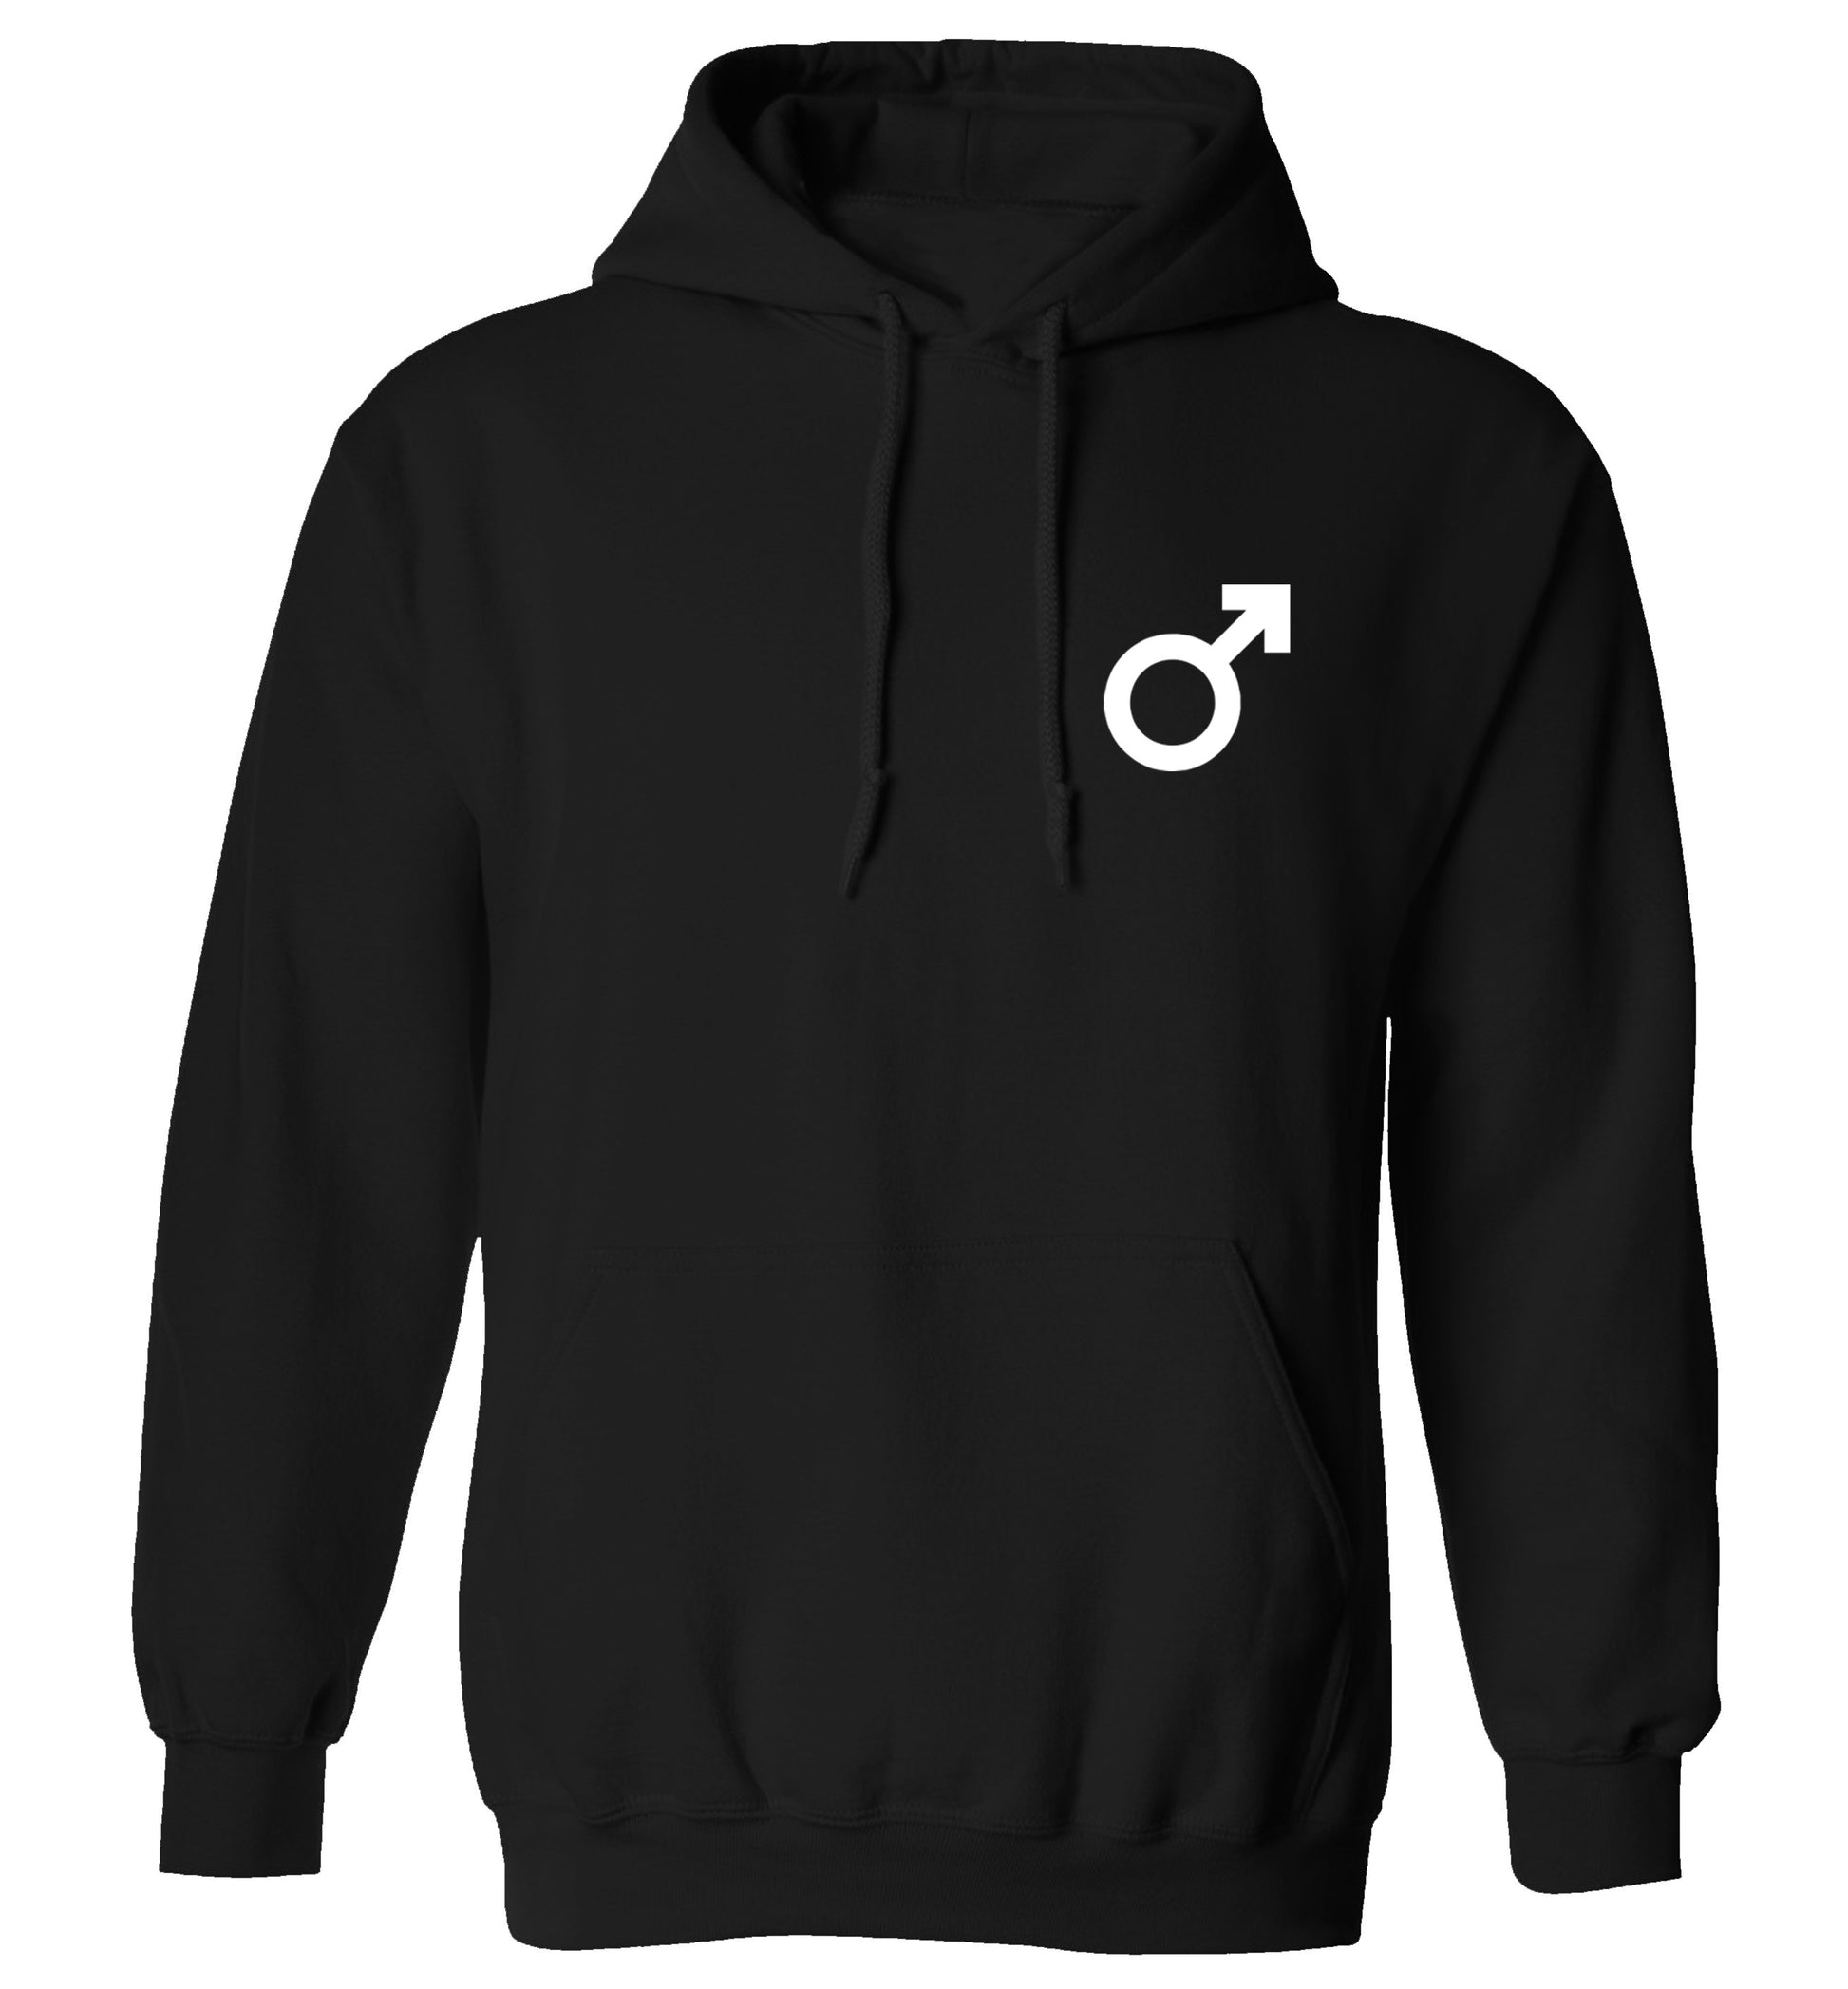 Male symbol pocket adults unisex black hoodie 2XL